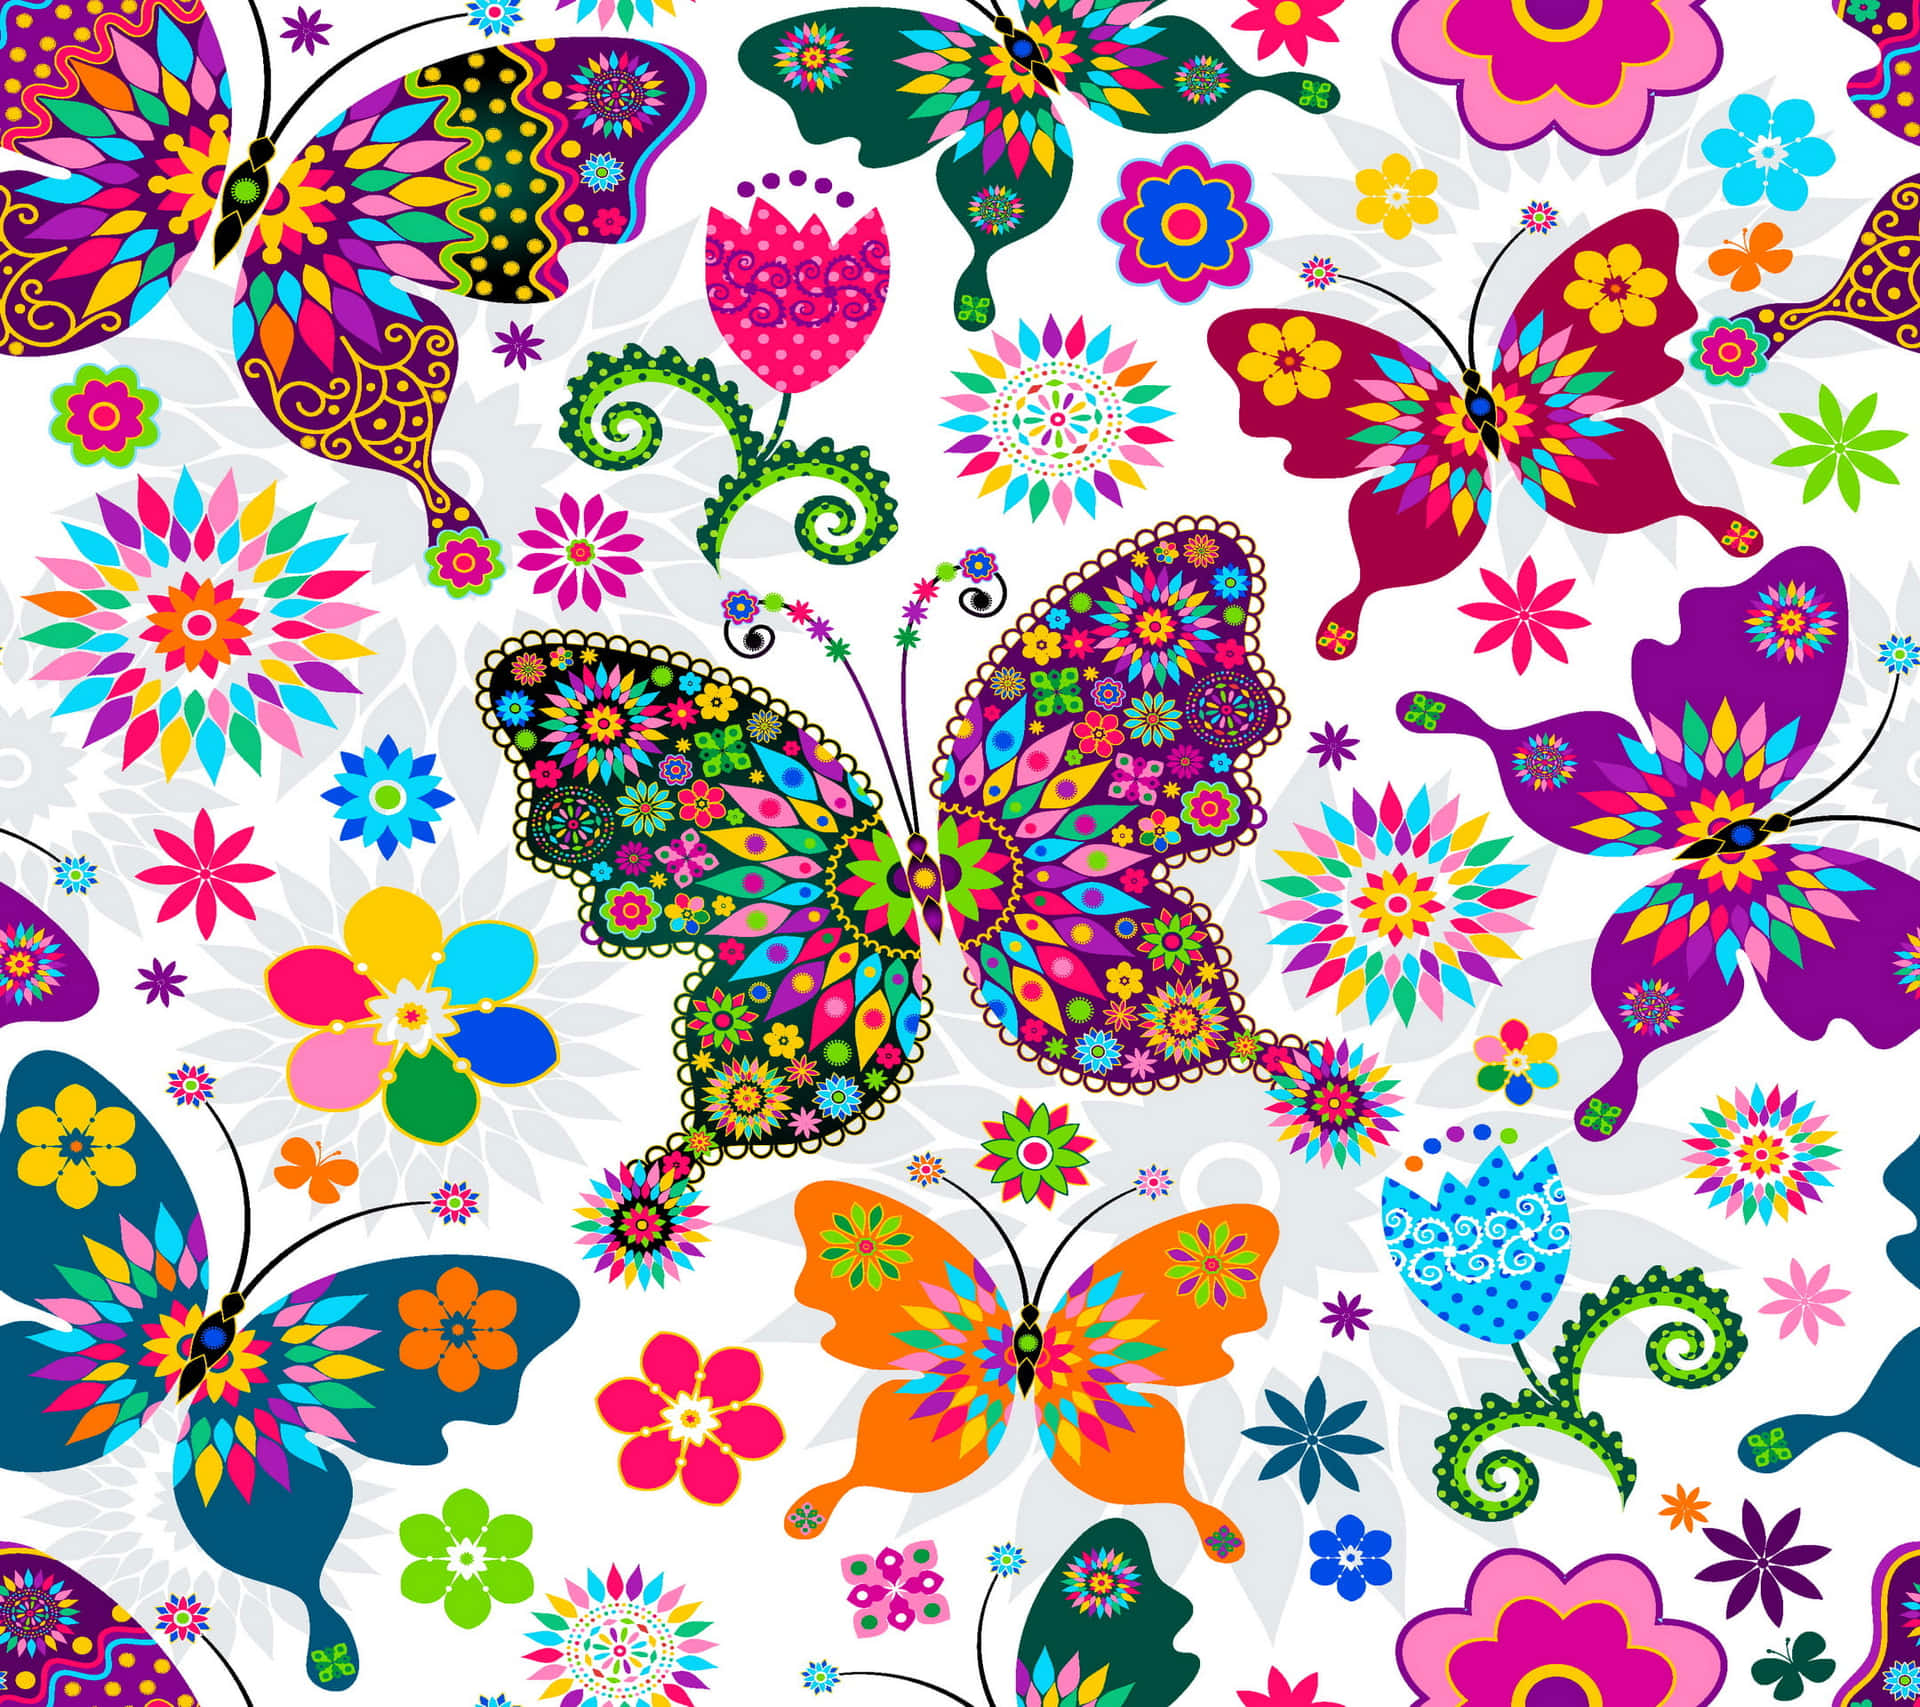 Farverige sommerfugle og blomster på en hvid baggrund